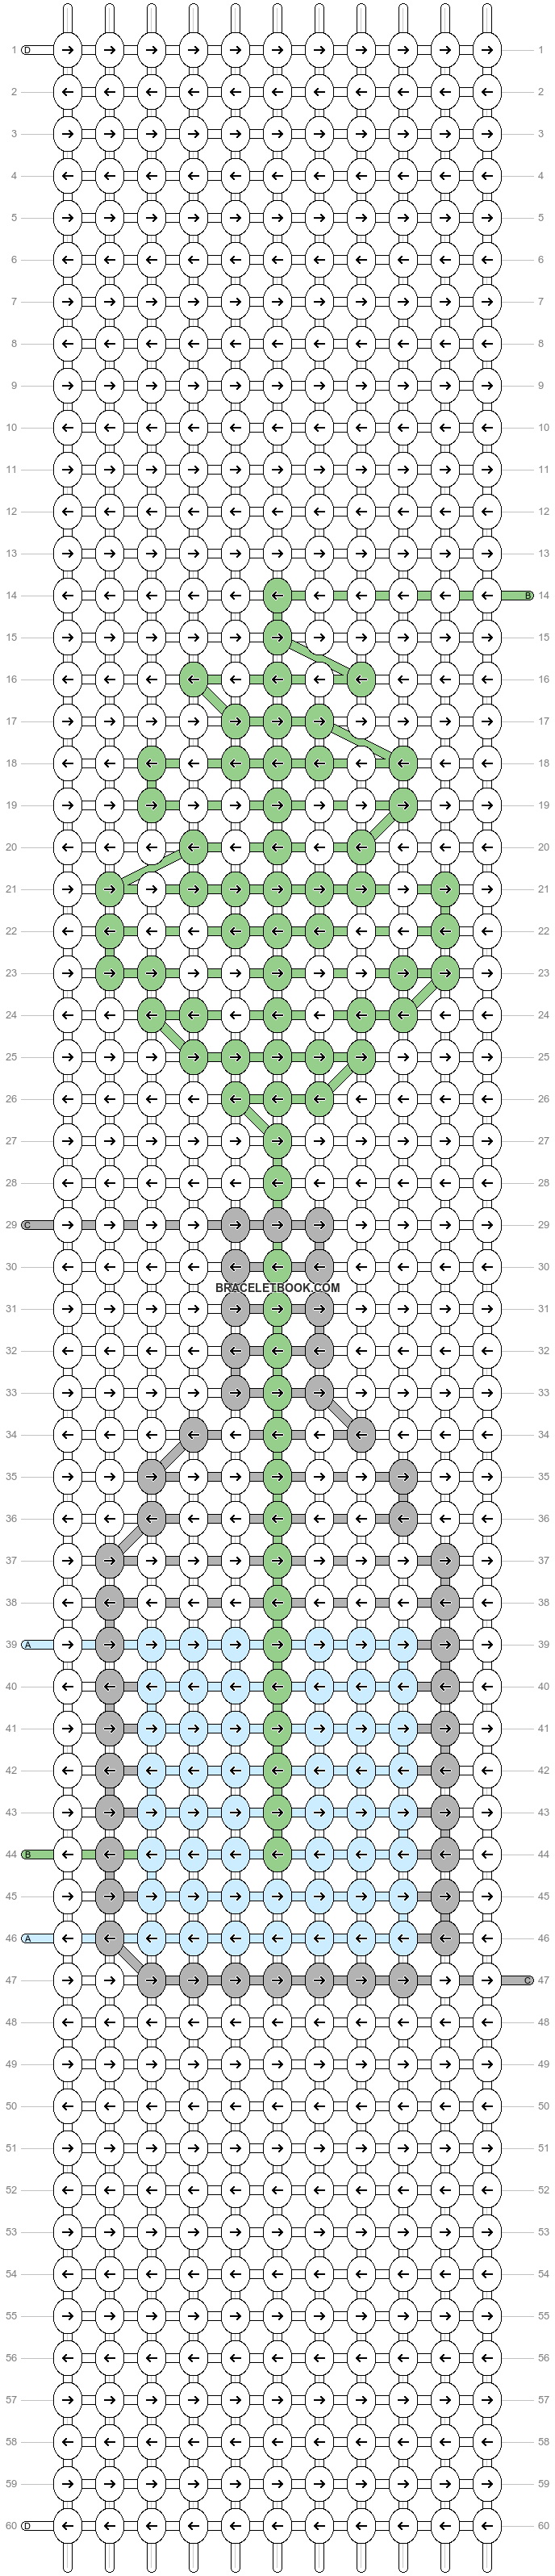 Alpha pattern #38260 variation #46312 pattern